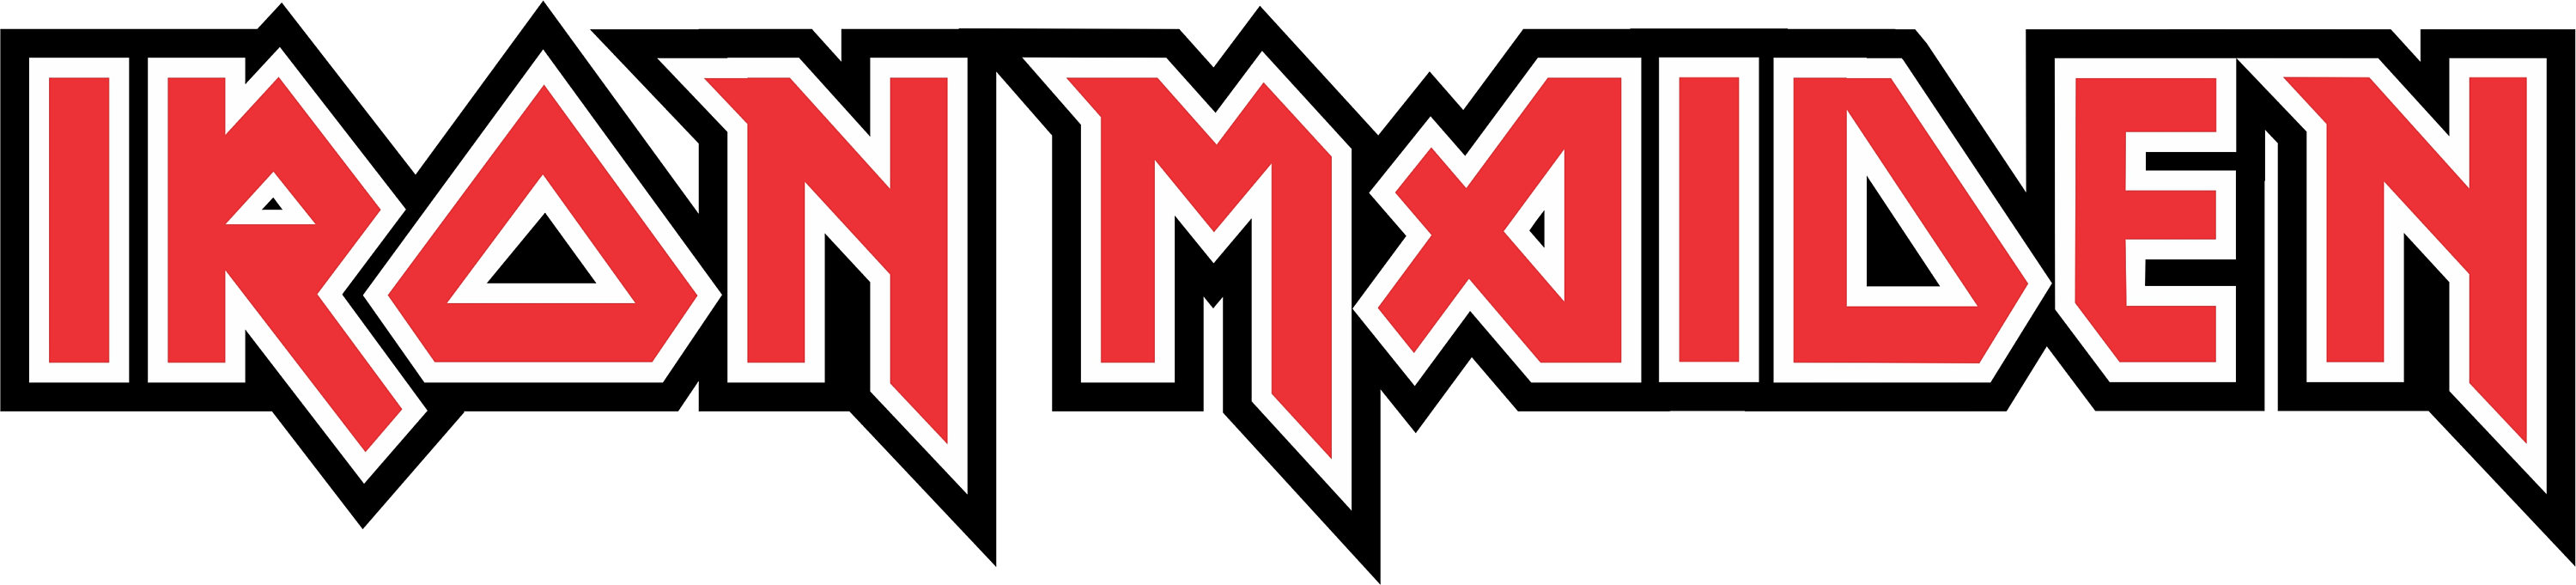 Iron Maiden Logo Wallpaper